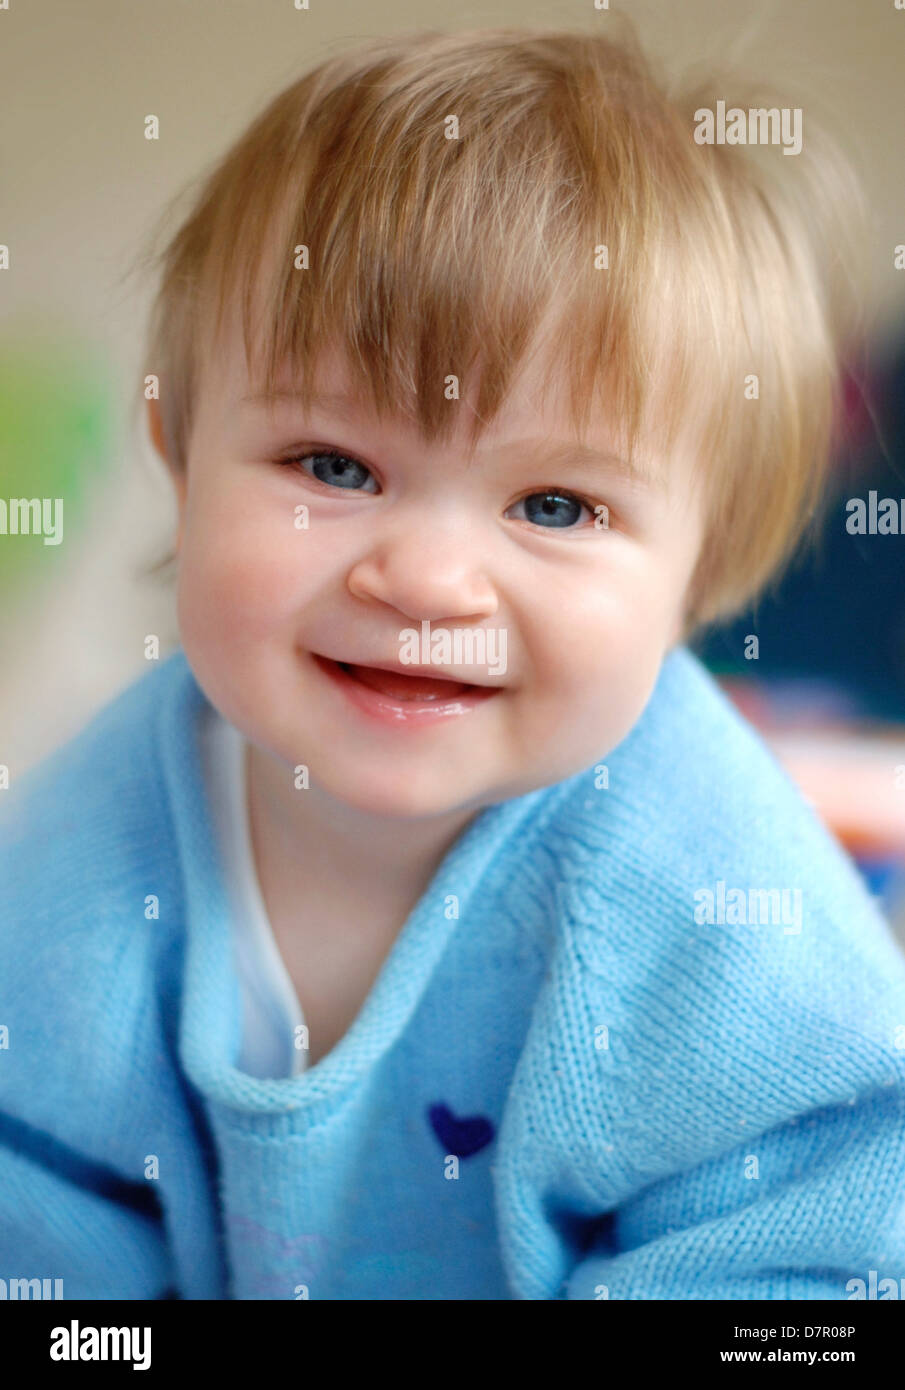 Cute Baby Girl With Long Hair Smiling At Camera Stock Photo